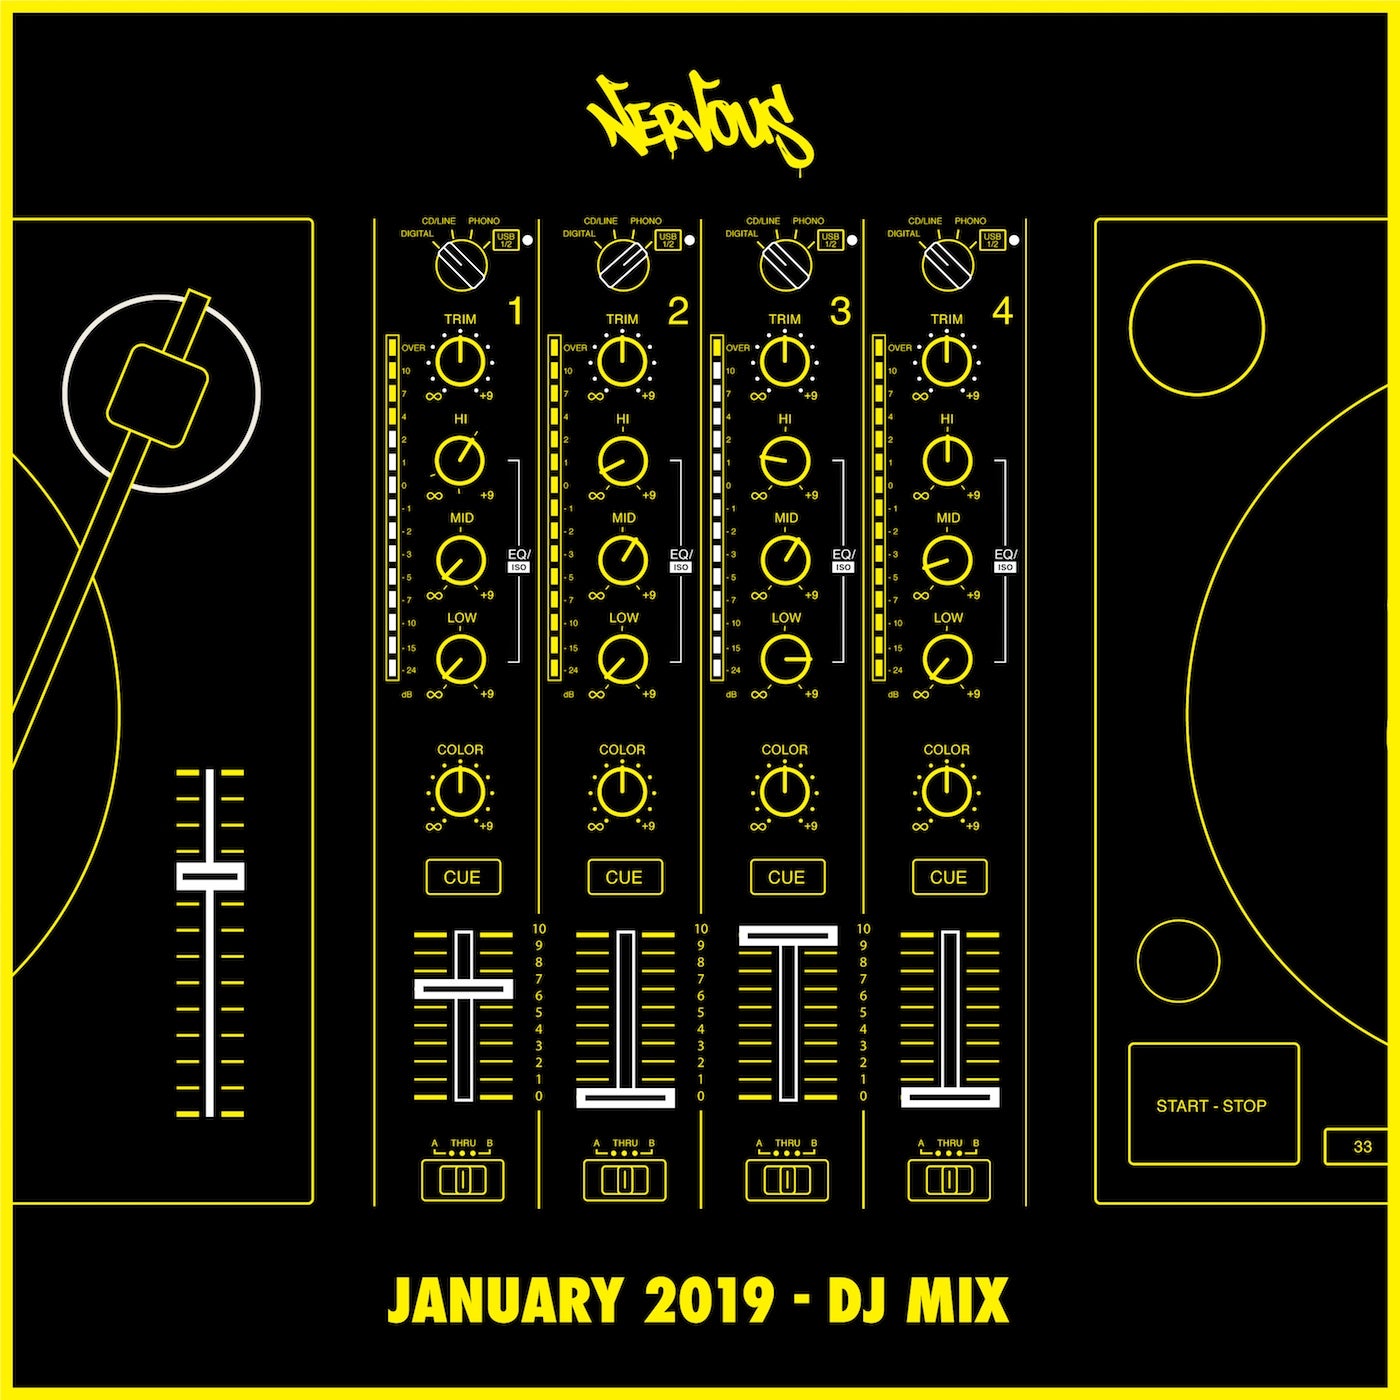 Nervous January 2019 - DJ Mix